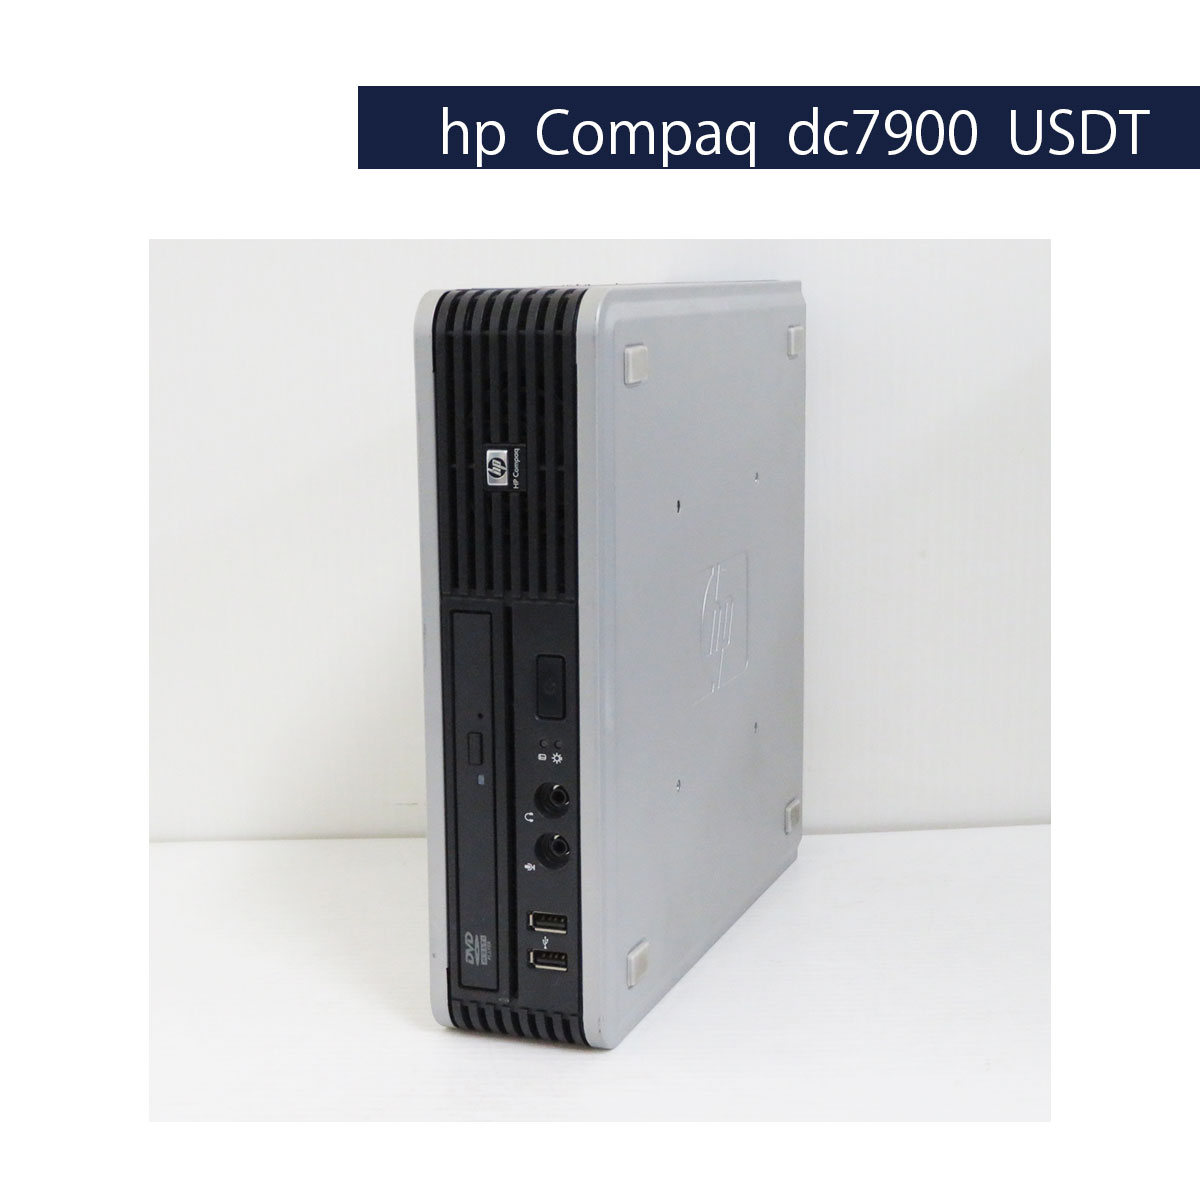 hp Compaq dc7900 USDT Core2Duo E8400 (Vista)